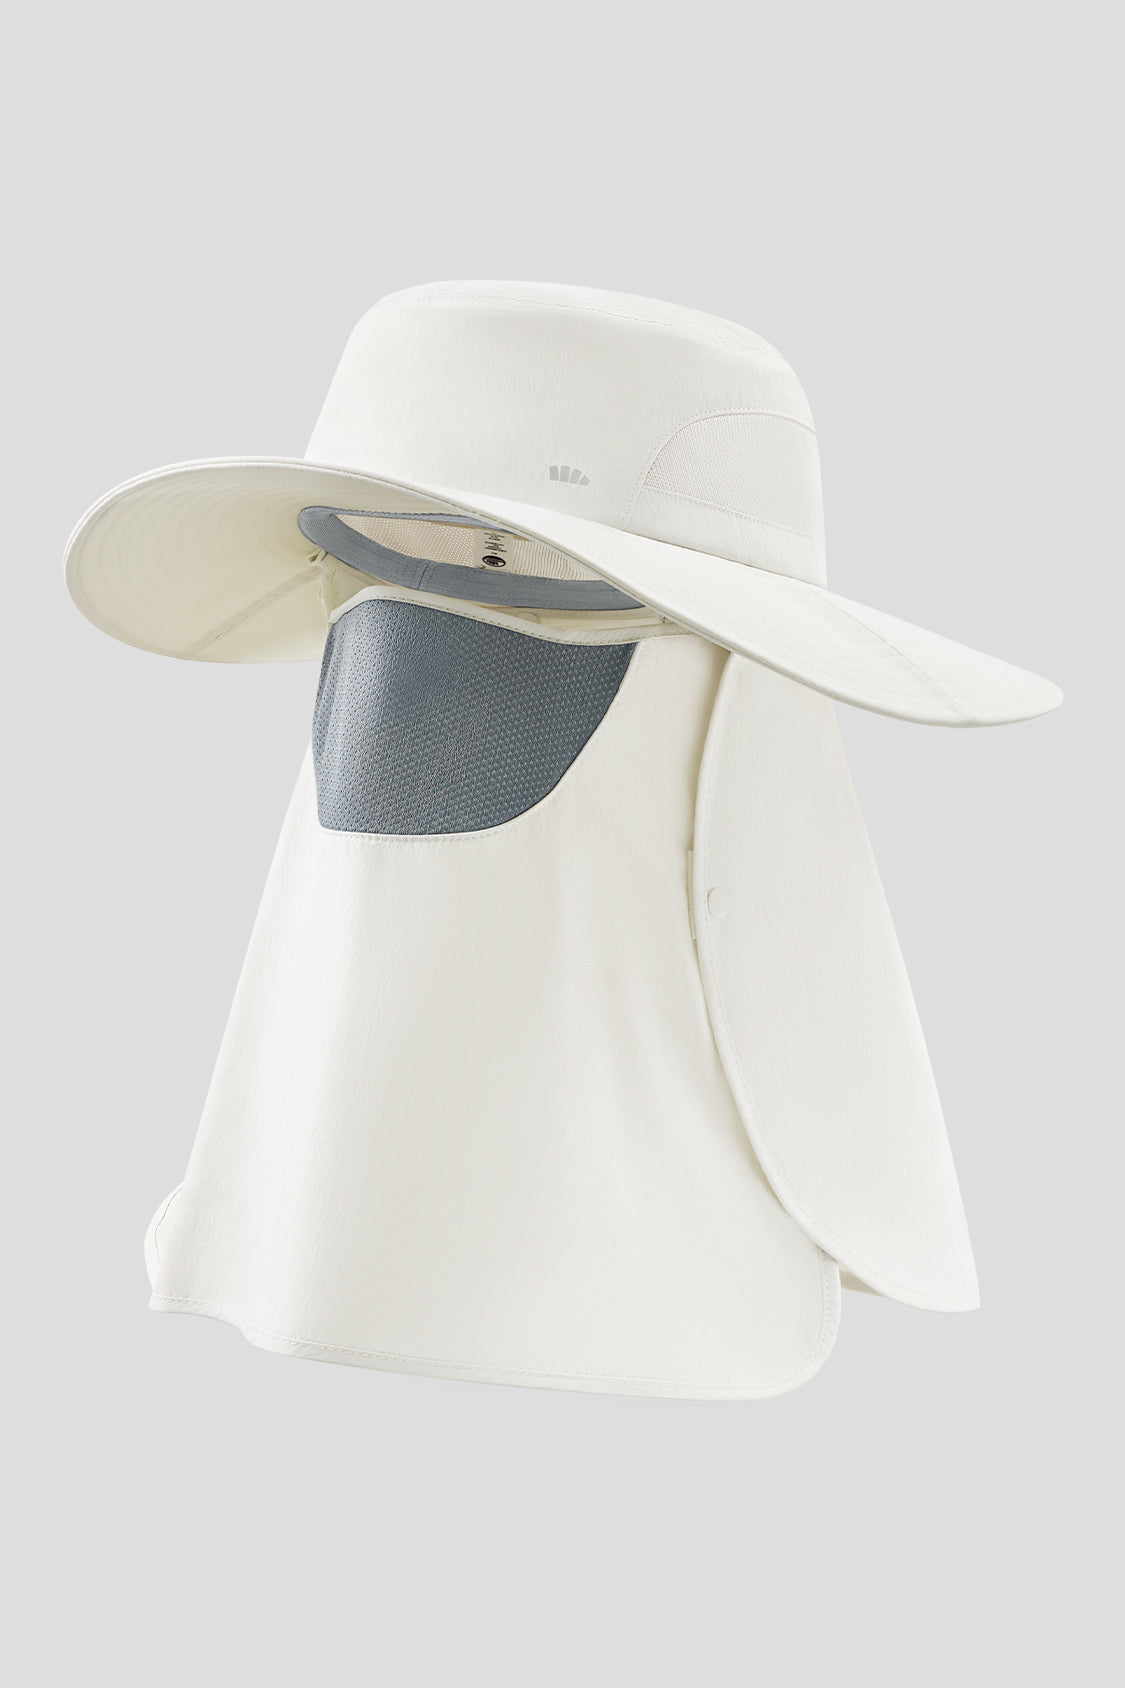 Cover - Men's Full Coverage Sun Protection Fishing Hat UPF50+ Light Moon Green / 58-60 cm